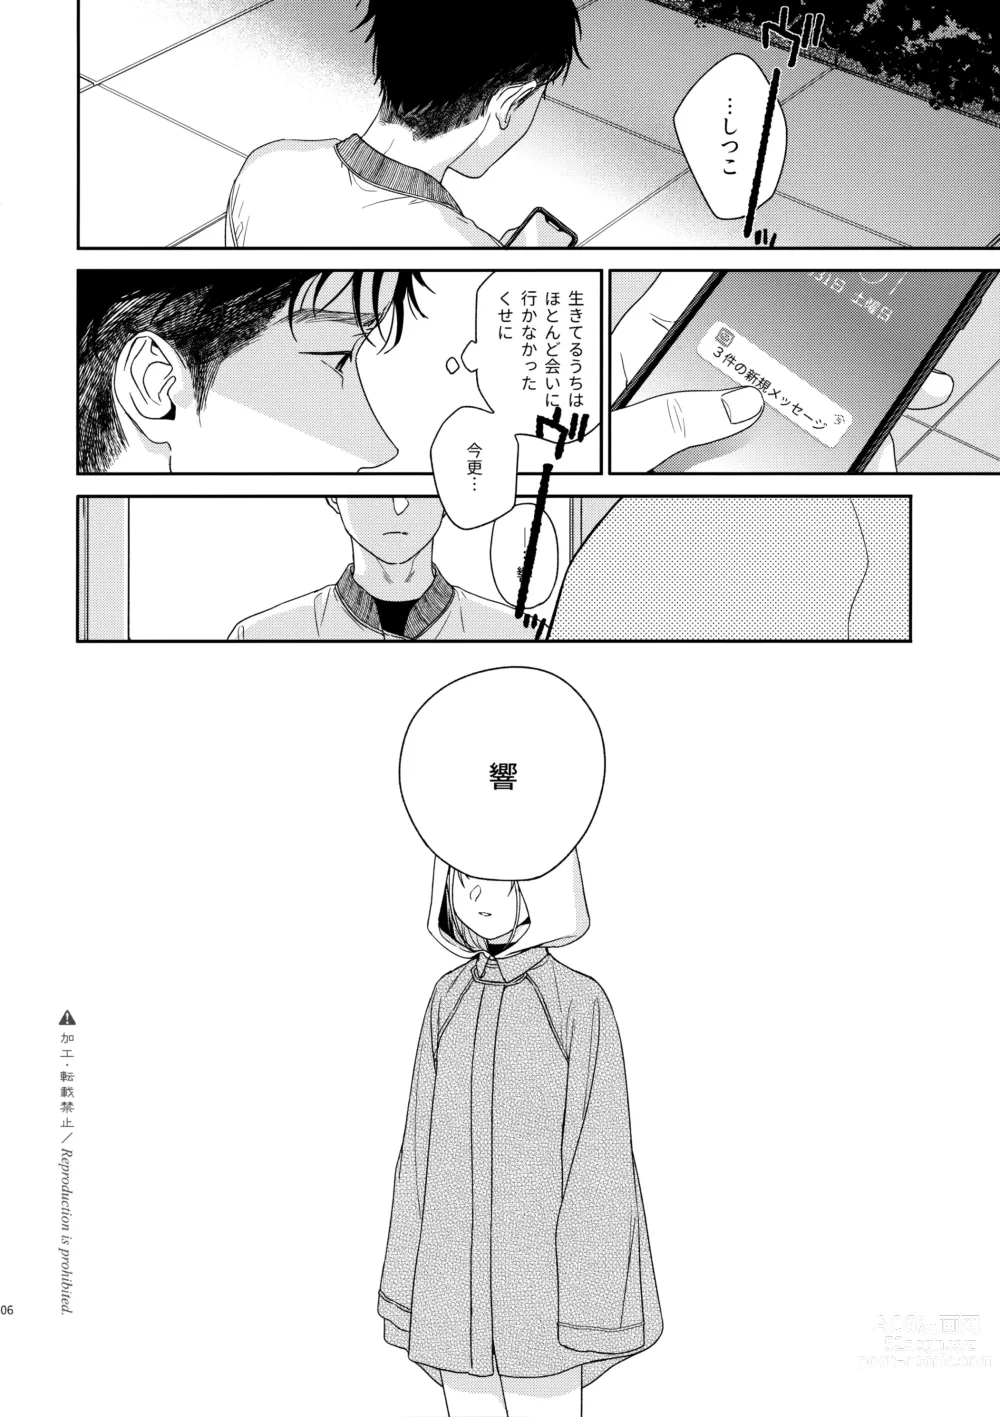 Page 5 of doujinshi Katami to Getsumei